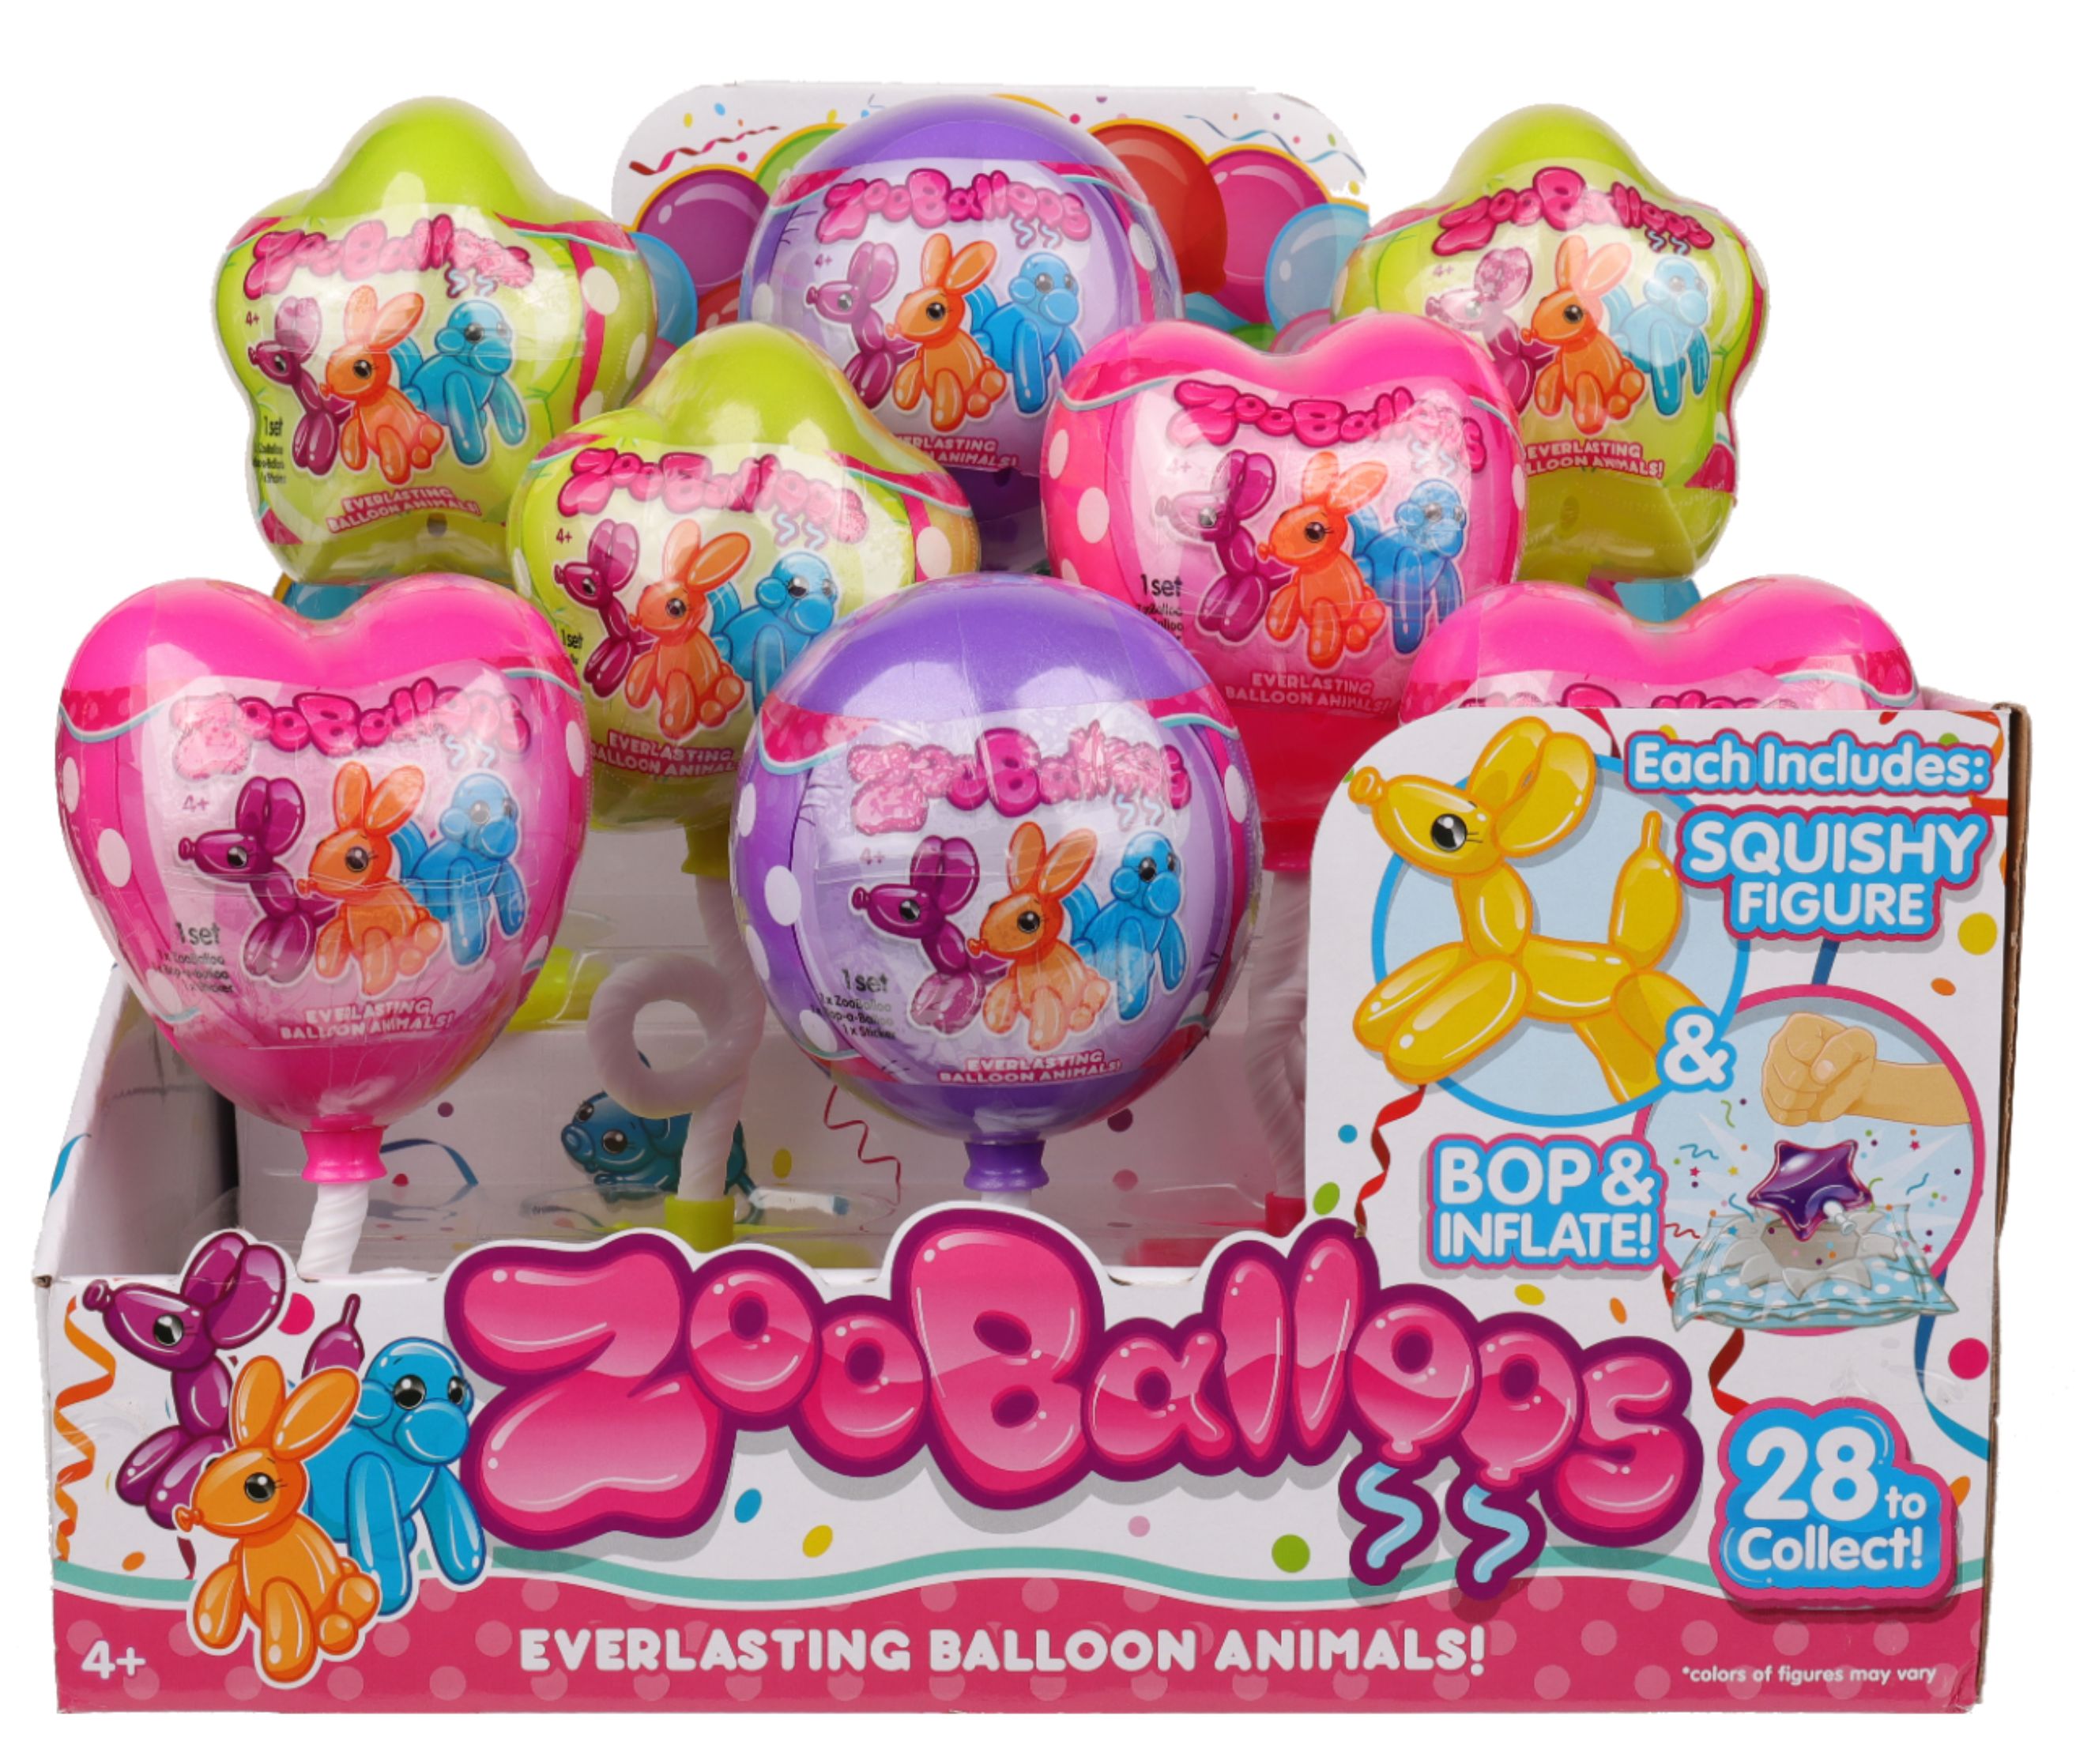 Zooballoos Cuties Everlasting Baloon Animals Figures Lot of 3 